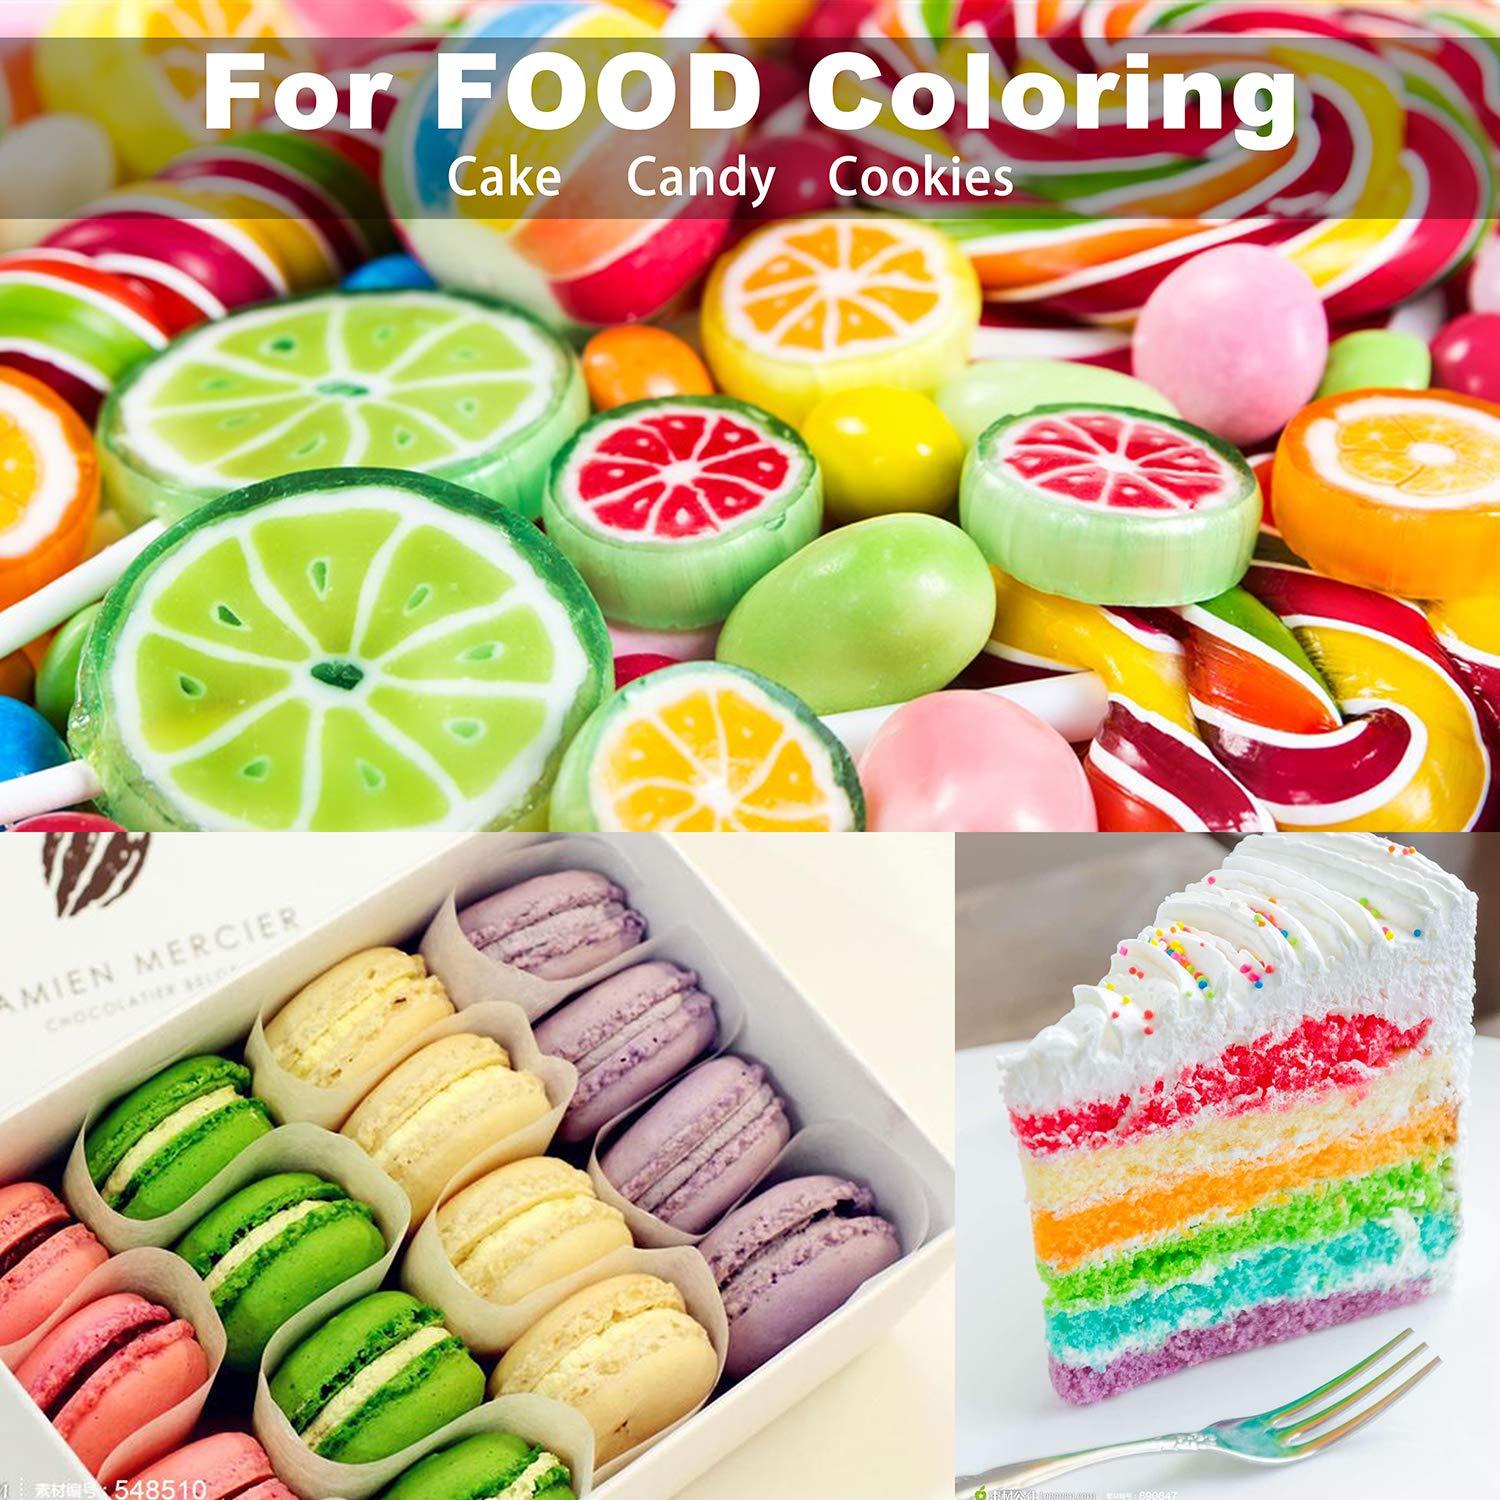  Food Coloring Liquid Set,12 Colors x 10ml Cake Food Coloring  Set for Baking Cake Decorating Edible Food Grade Food Color Dye for  Fondant,Macaron,Icing,Slime Making DIY Supplies Kit-0.35 Fl. oz/Bottles 